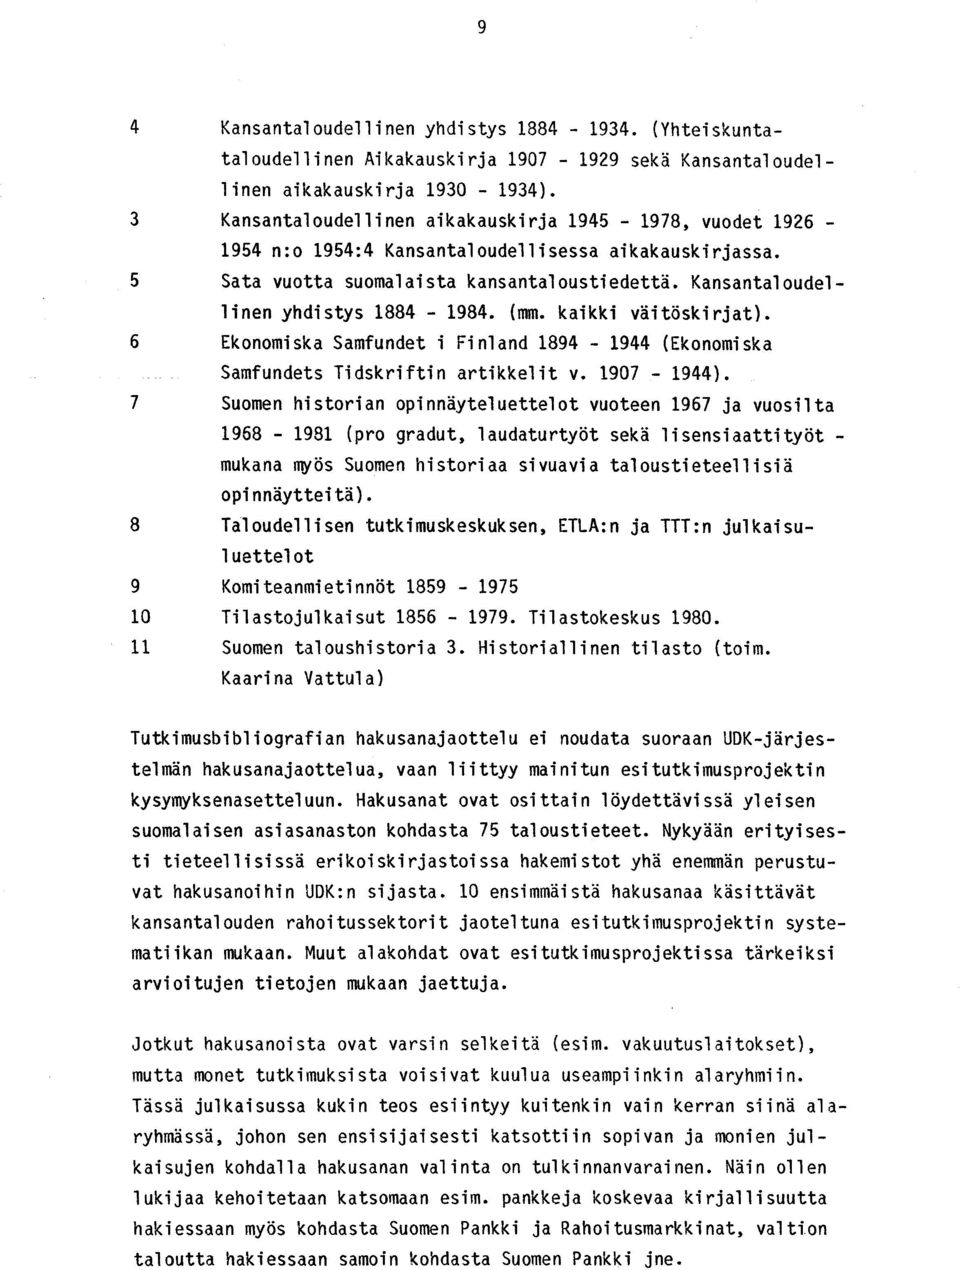 Kansantaloudellinen yhdistys 1884-1984. (mm. kaikki väitöskirjat). 6 Ekonomiska Samfundet i Finland 1894-1944 (Ekonomiska Samfundets Tidskriftin artikkelit v. 1907-1944).